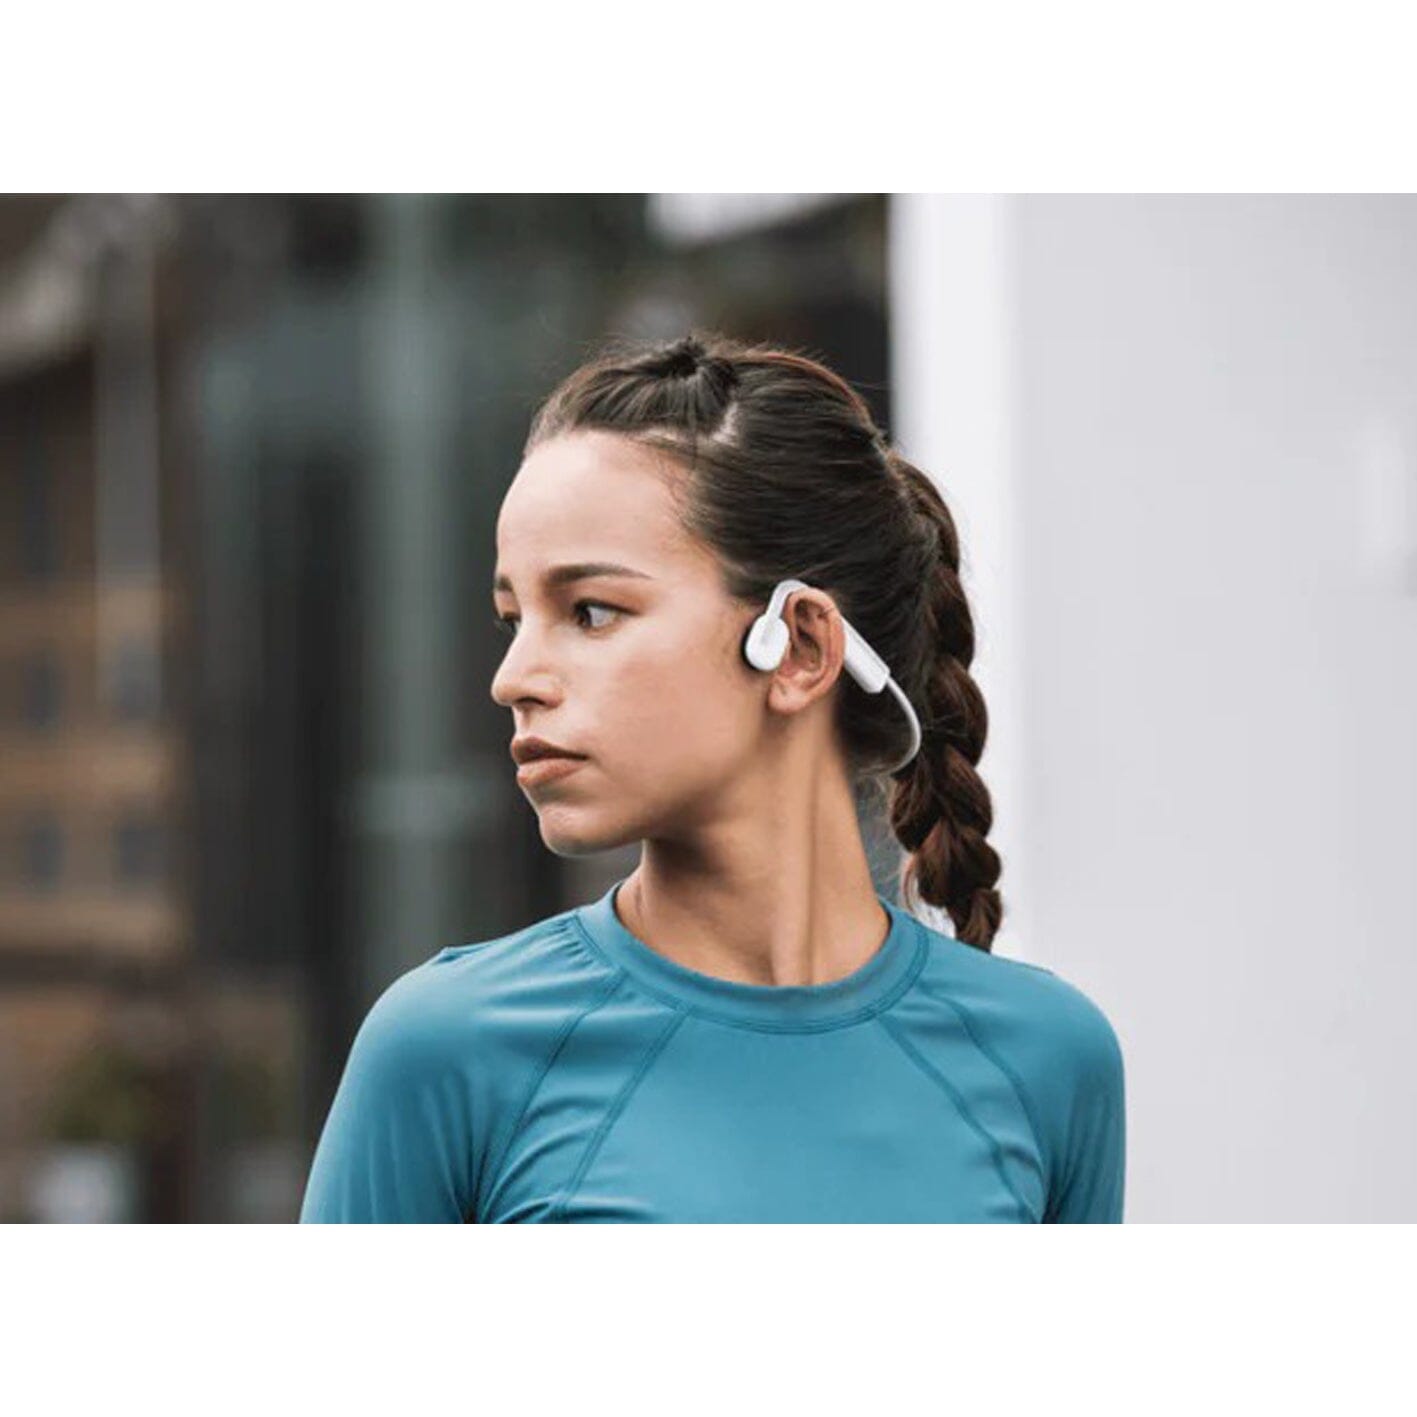 SHOKZ OpenMove - Open-Ear Bluetooth Sport Headphones - Bone Conduction Wireless Earphones - Sweatproof for Running and Workouts, with Sticker Pack ONE2WORLD 